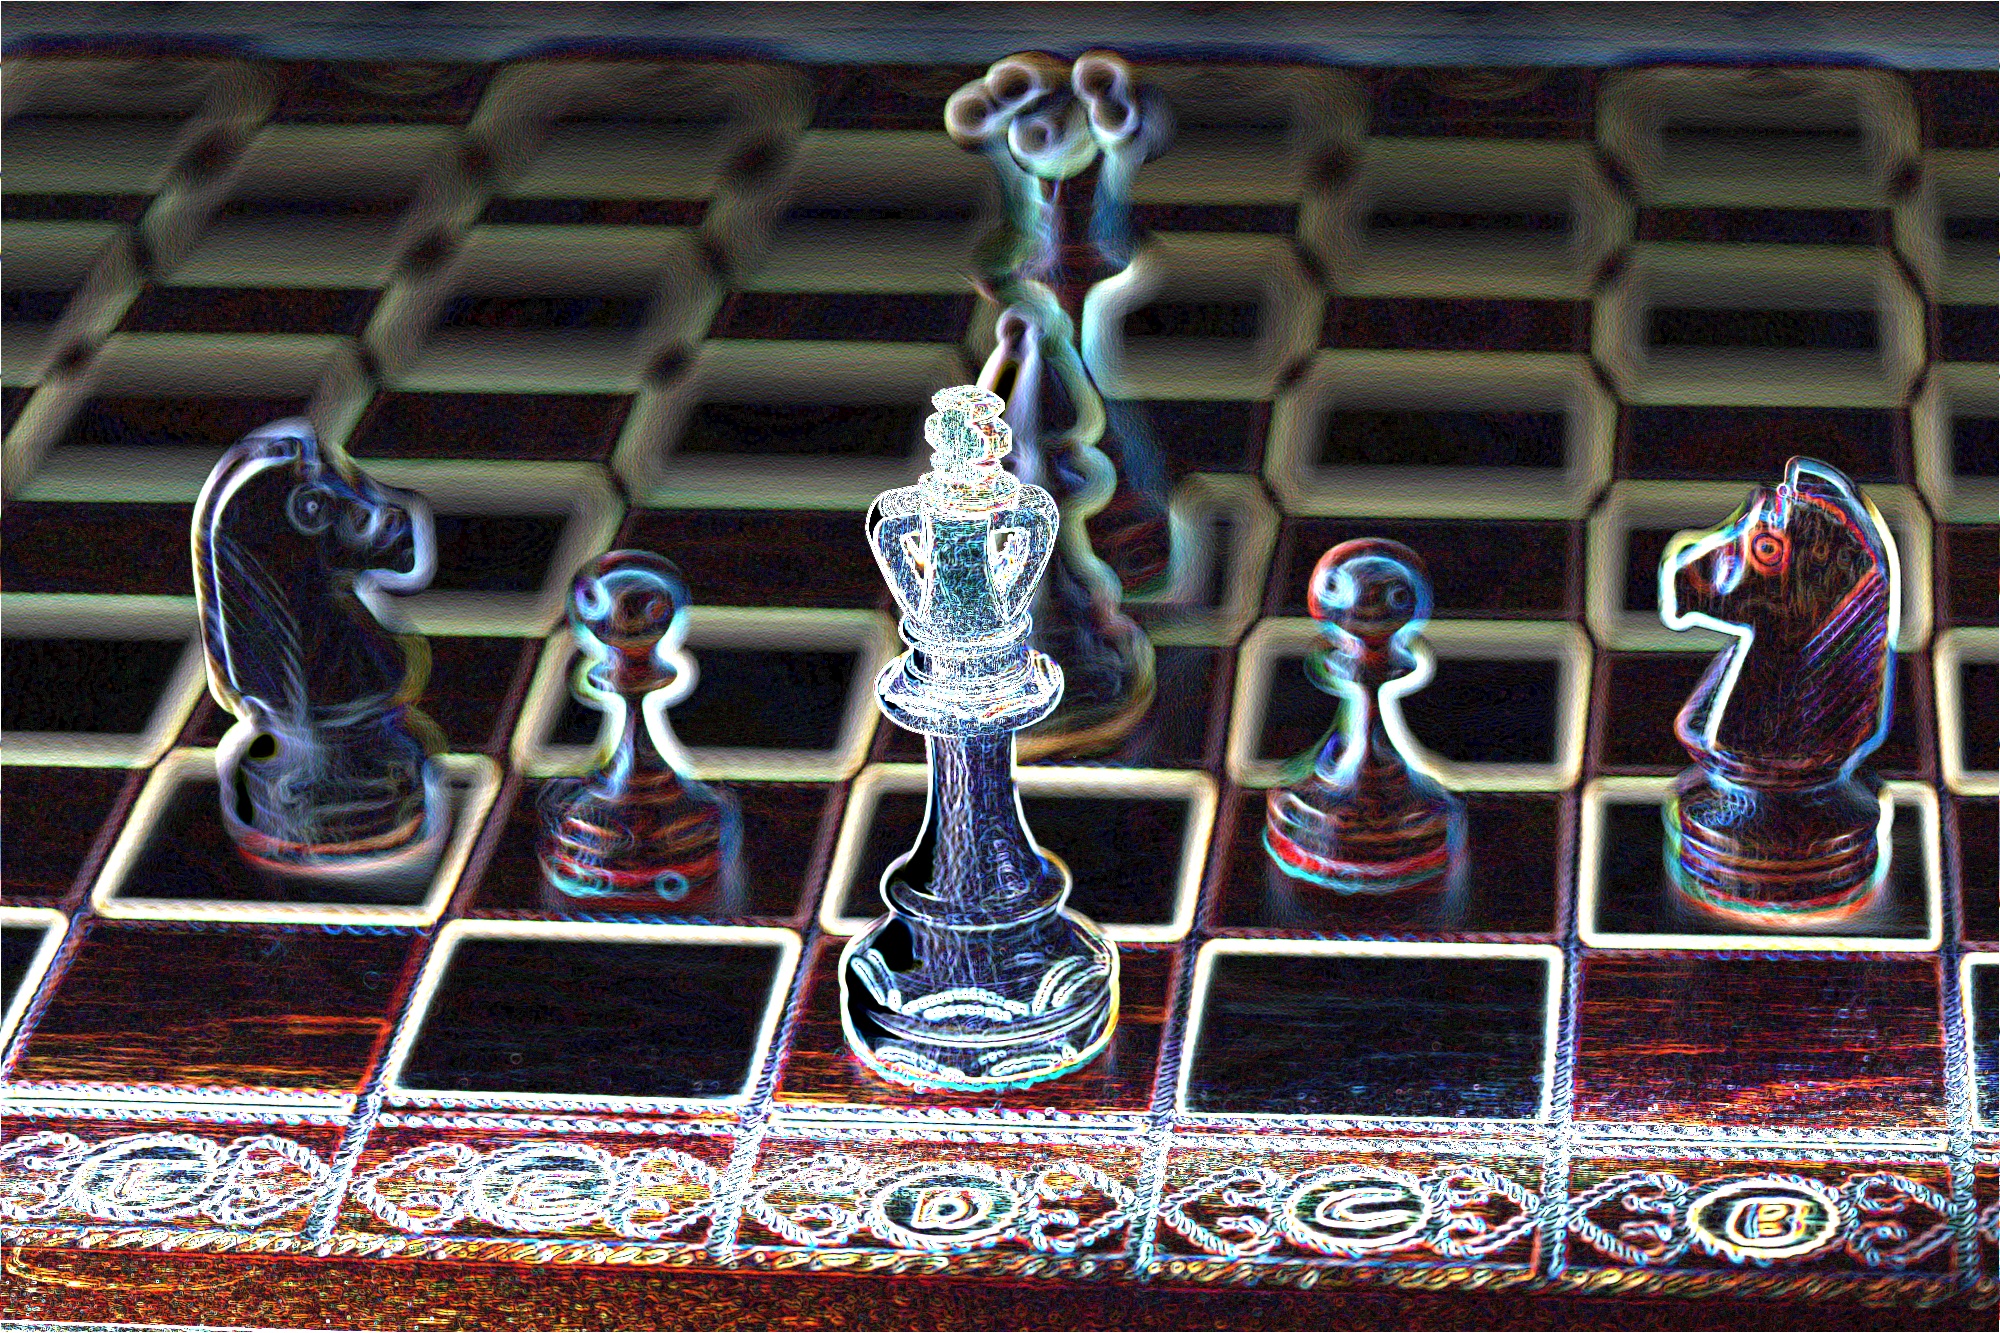 David L. šachy 6